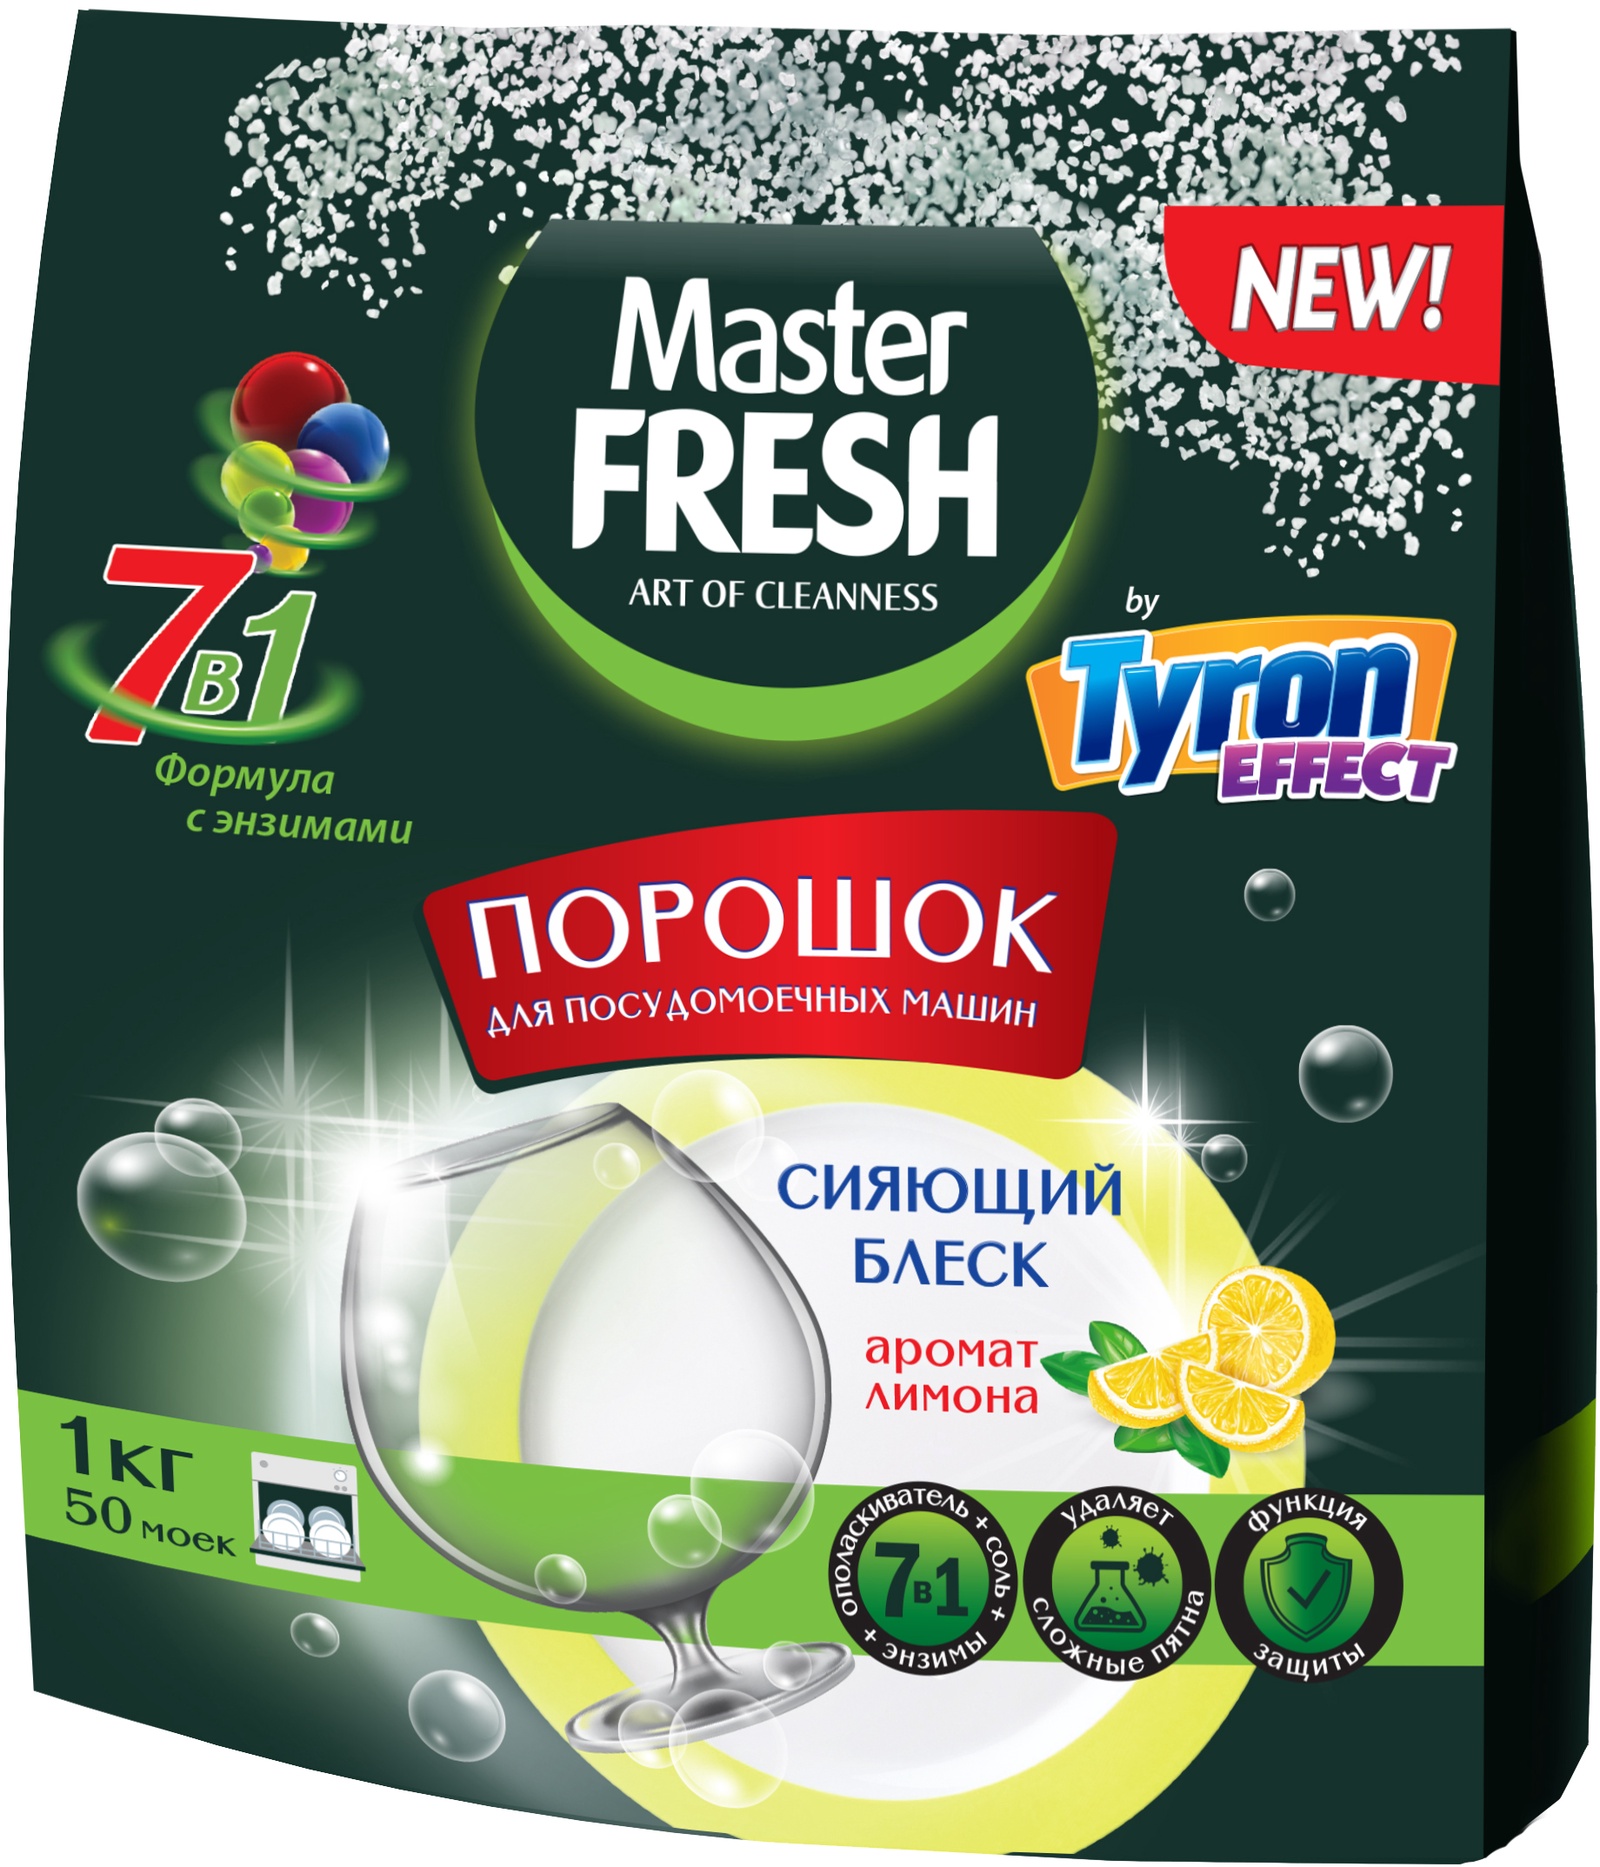 фото Средство для мытья посуды TYRON MASTER FRESH формула 7 в 1, 1 кг, 1